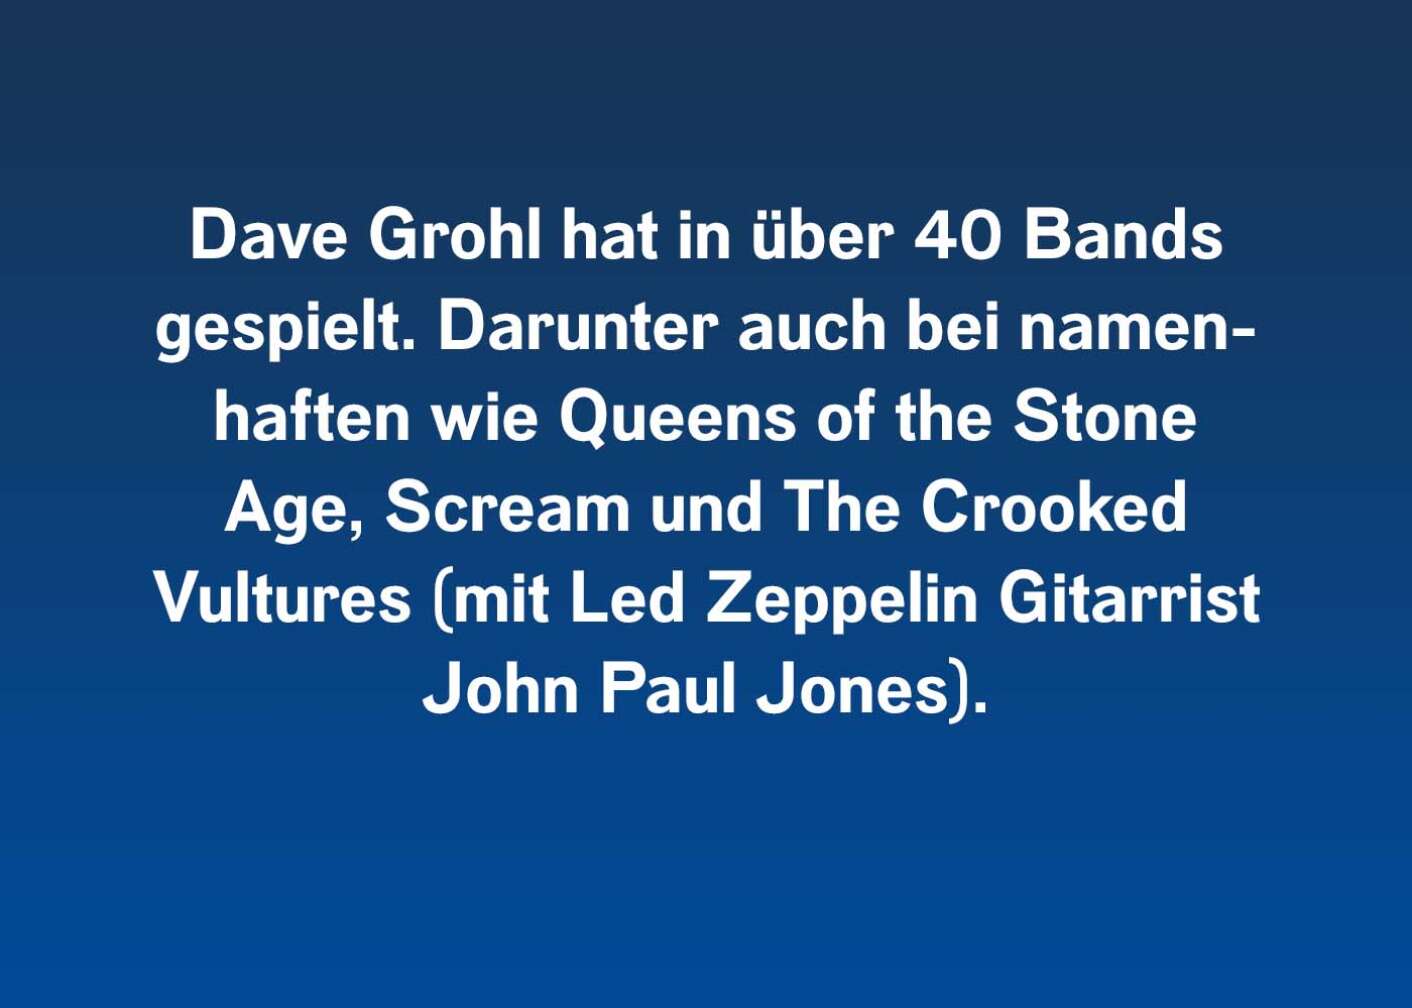 Dave Grohl hat in über 40 Bands gespielt. Darunter auch bei namenhaften wie Queens of the Stone Age, Scream und The Crooked Vultures (mit Led Zeppelin Gitarrist John Paul Jones).